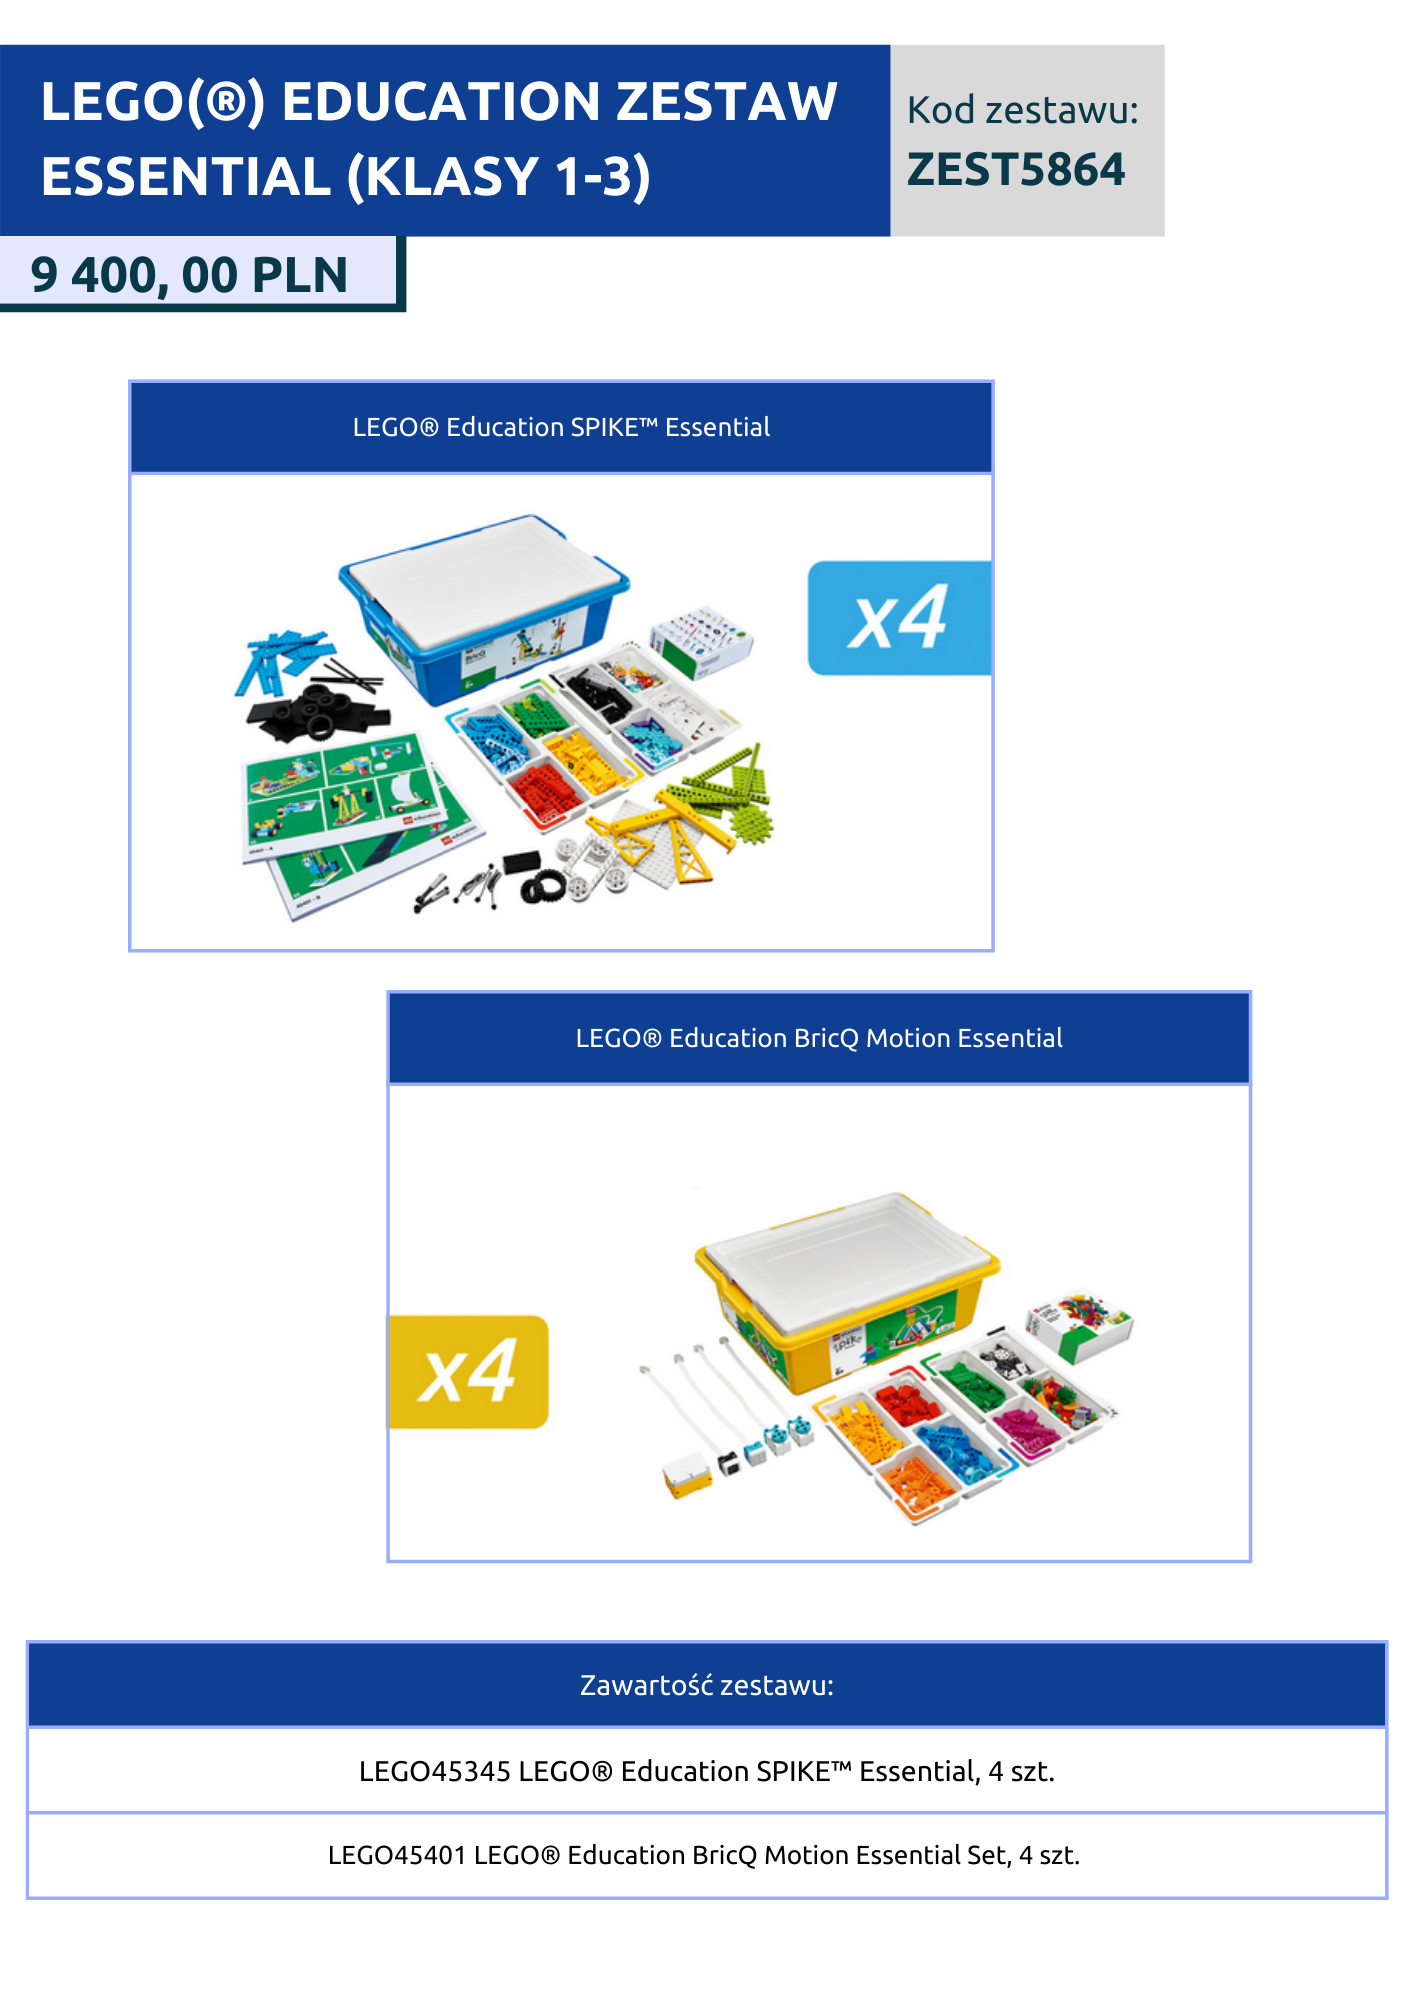 Lego Education dla klas I-III